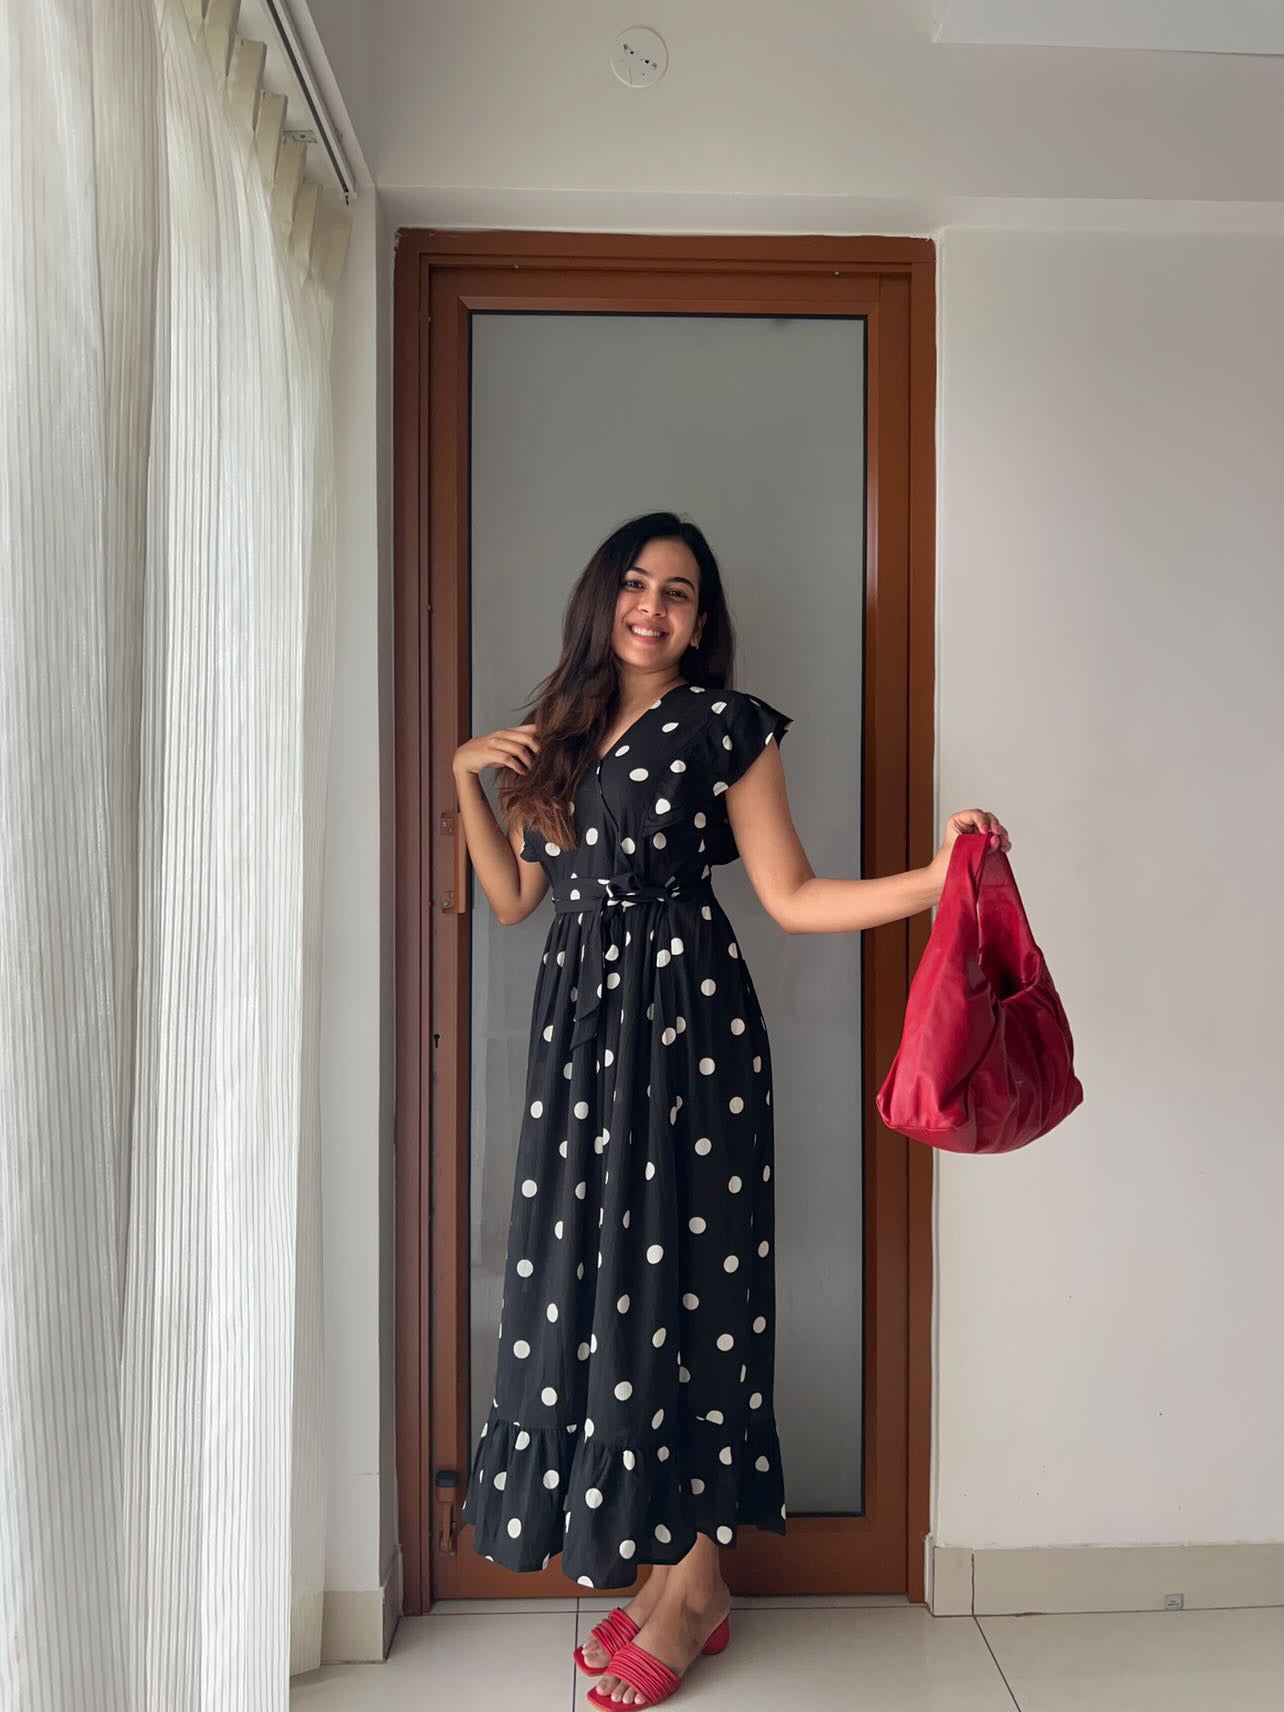 Anushka Sharma opts for mini black polka dot dress to announce pregnancy -  India Today